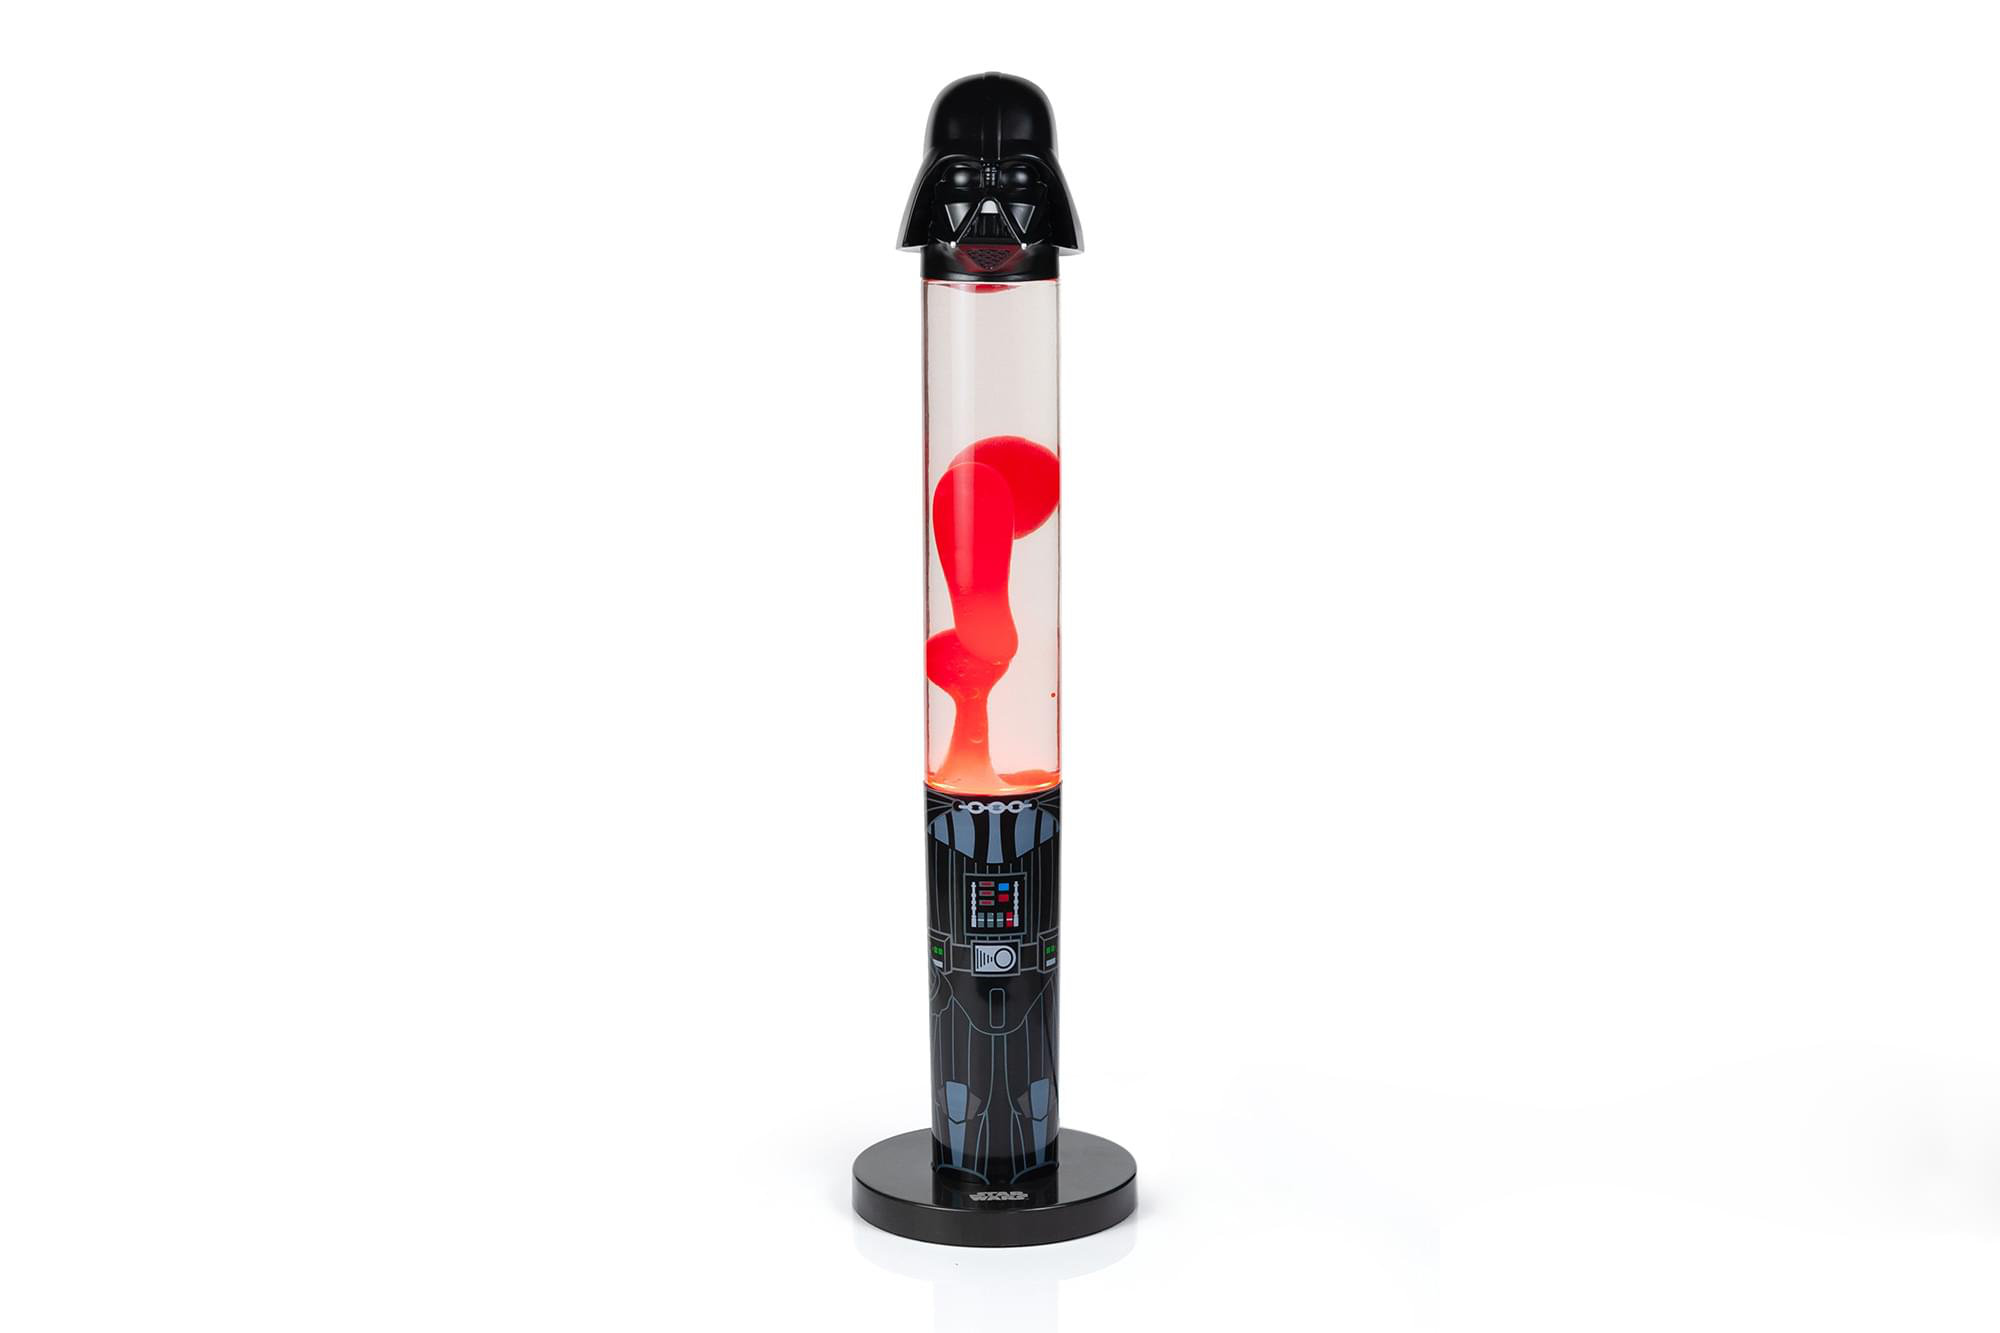 Practical Funds float Ukonic Lampe de lave 3D Star Wars Darth Vader - Wayfair Canada